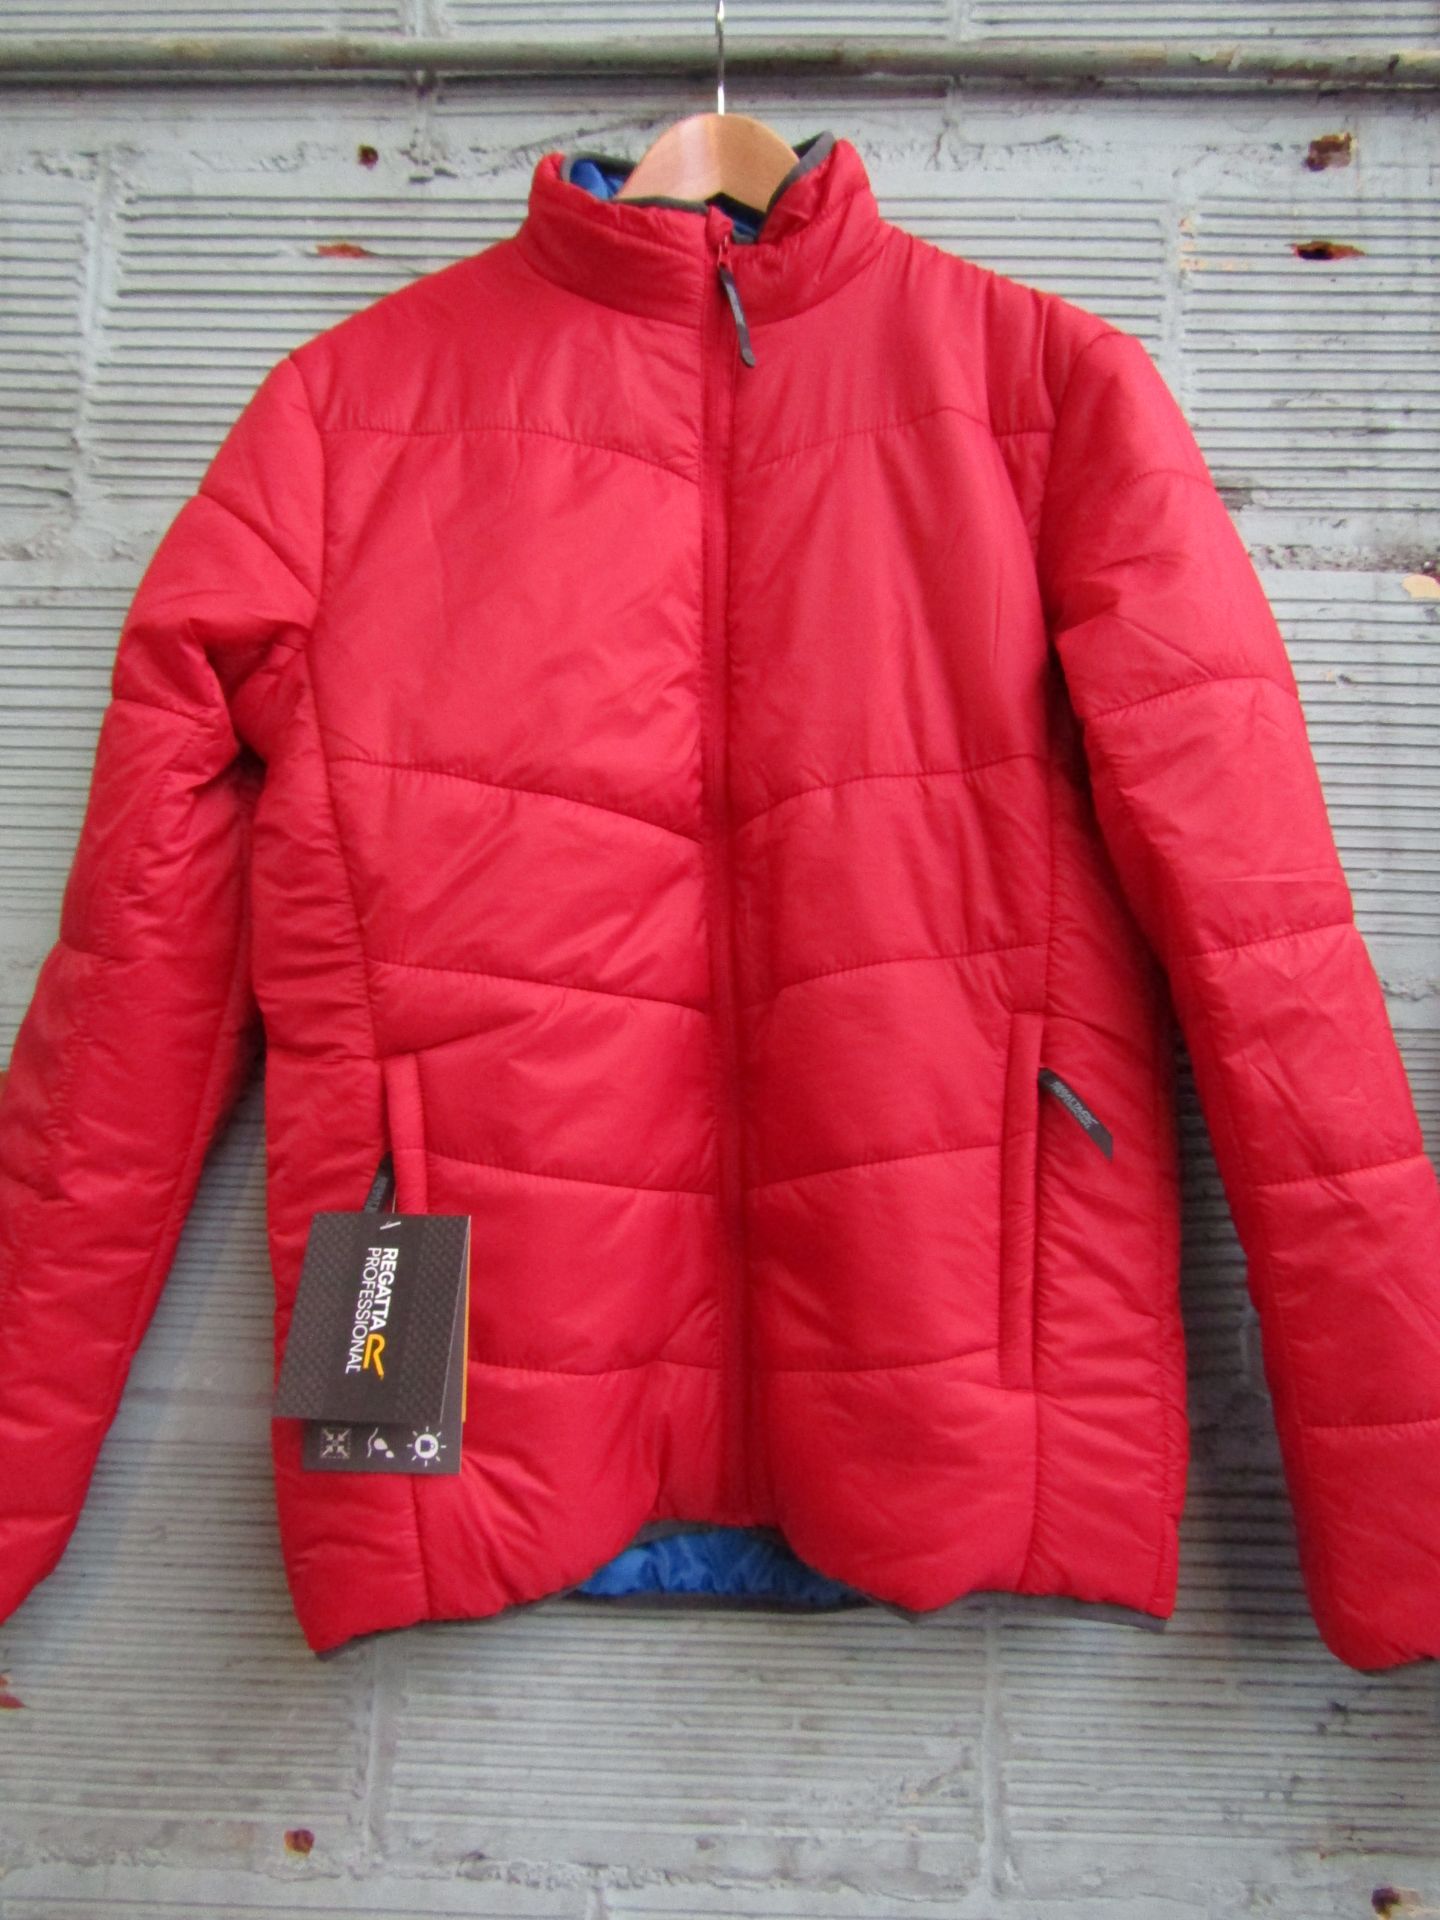 Regatta Professional, jacket Red 100% Polyamide outer 100% Polyester lining & padding size Large new